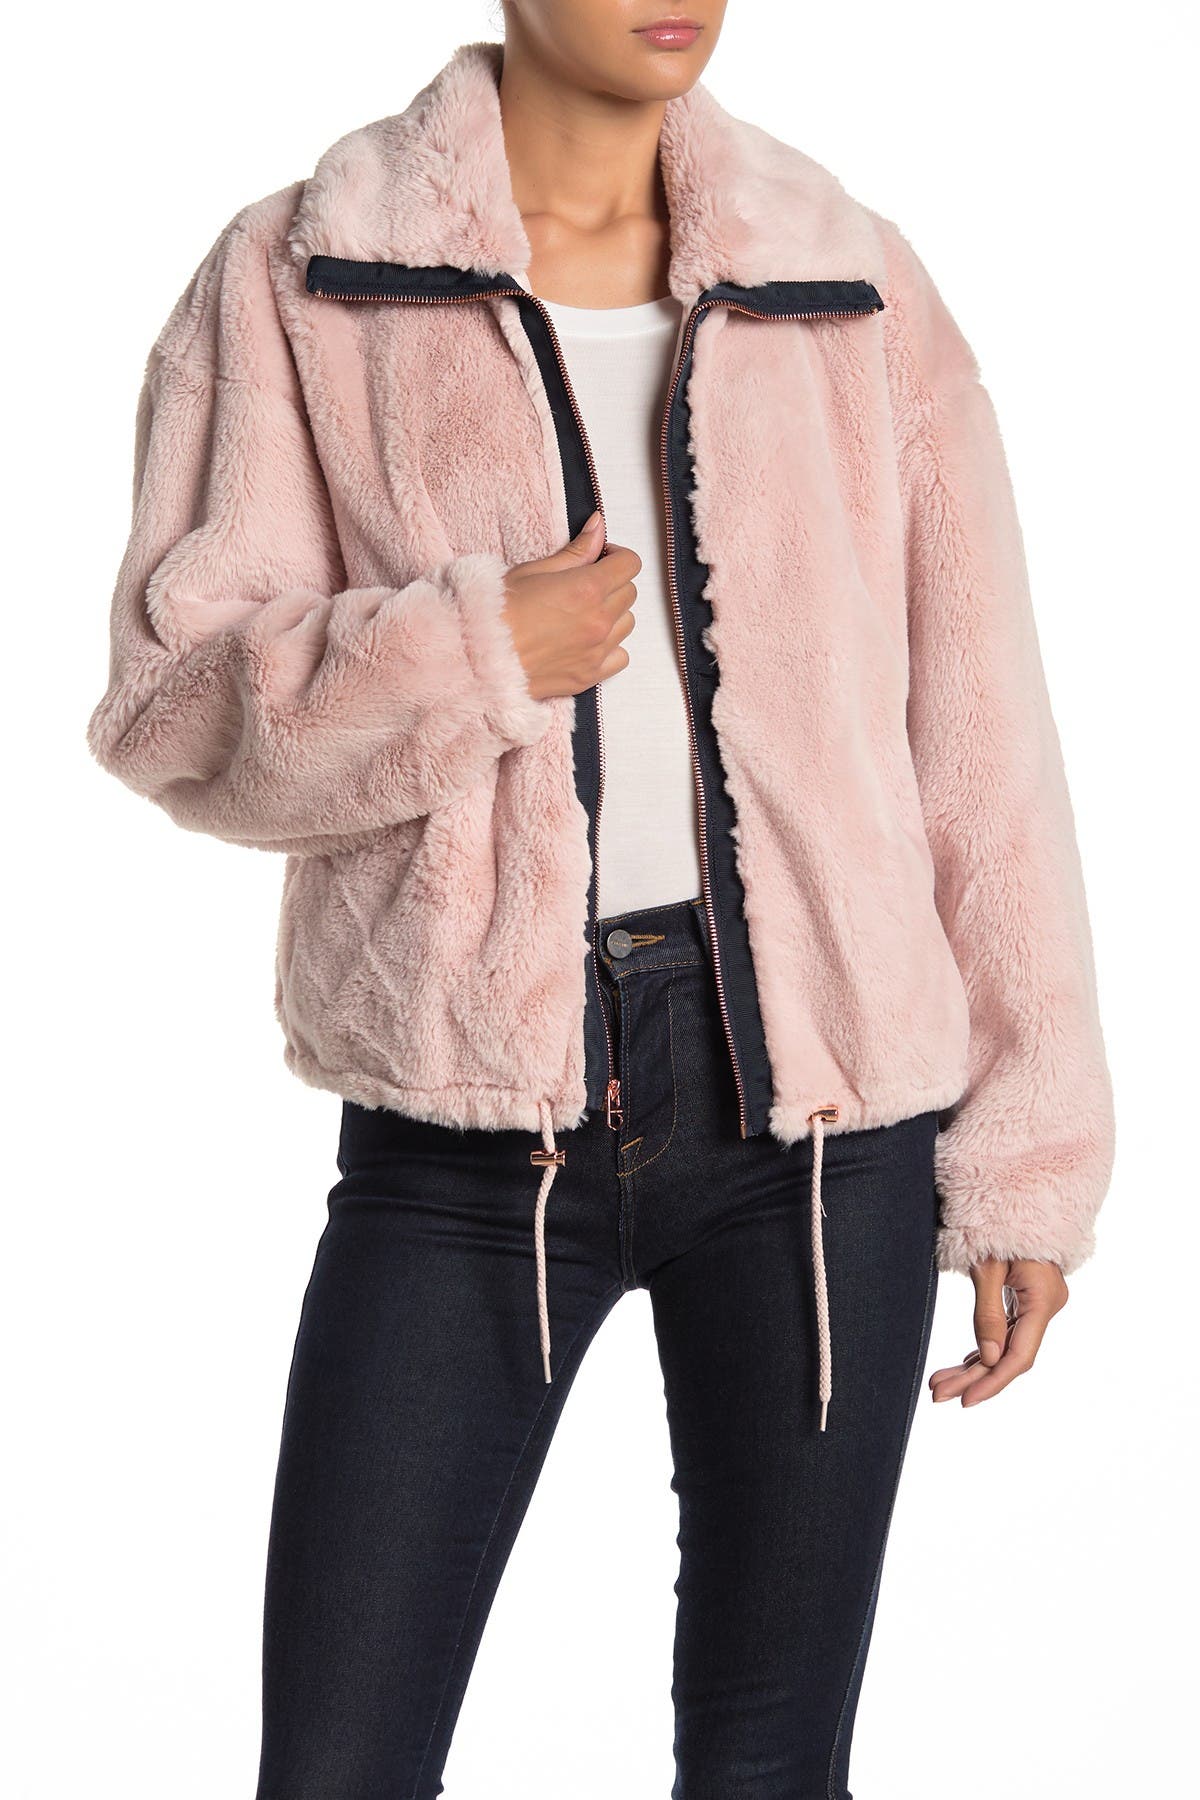 lucky brand missy short faux fur jacket